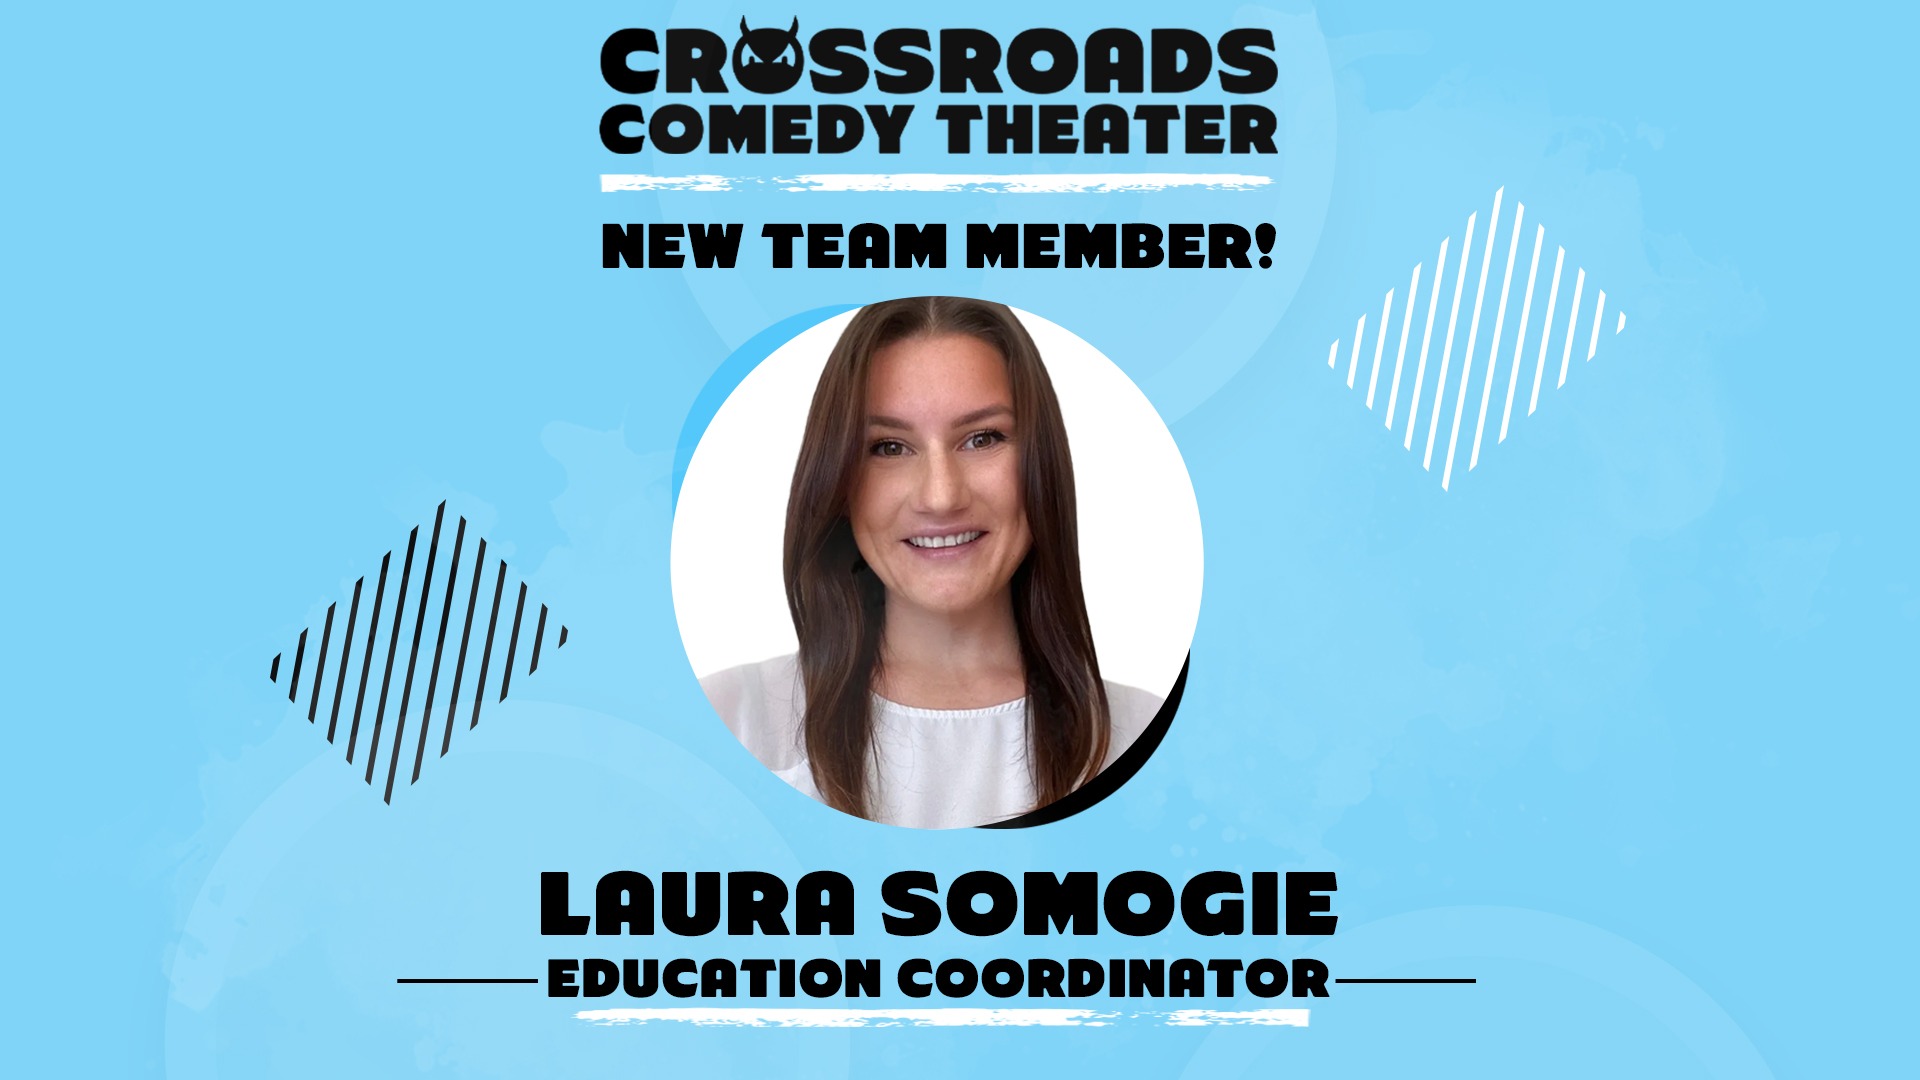 Announcing Laura Somogie As Education Coordinator!